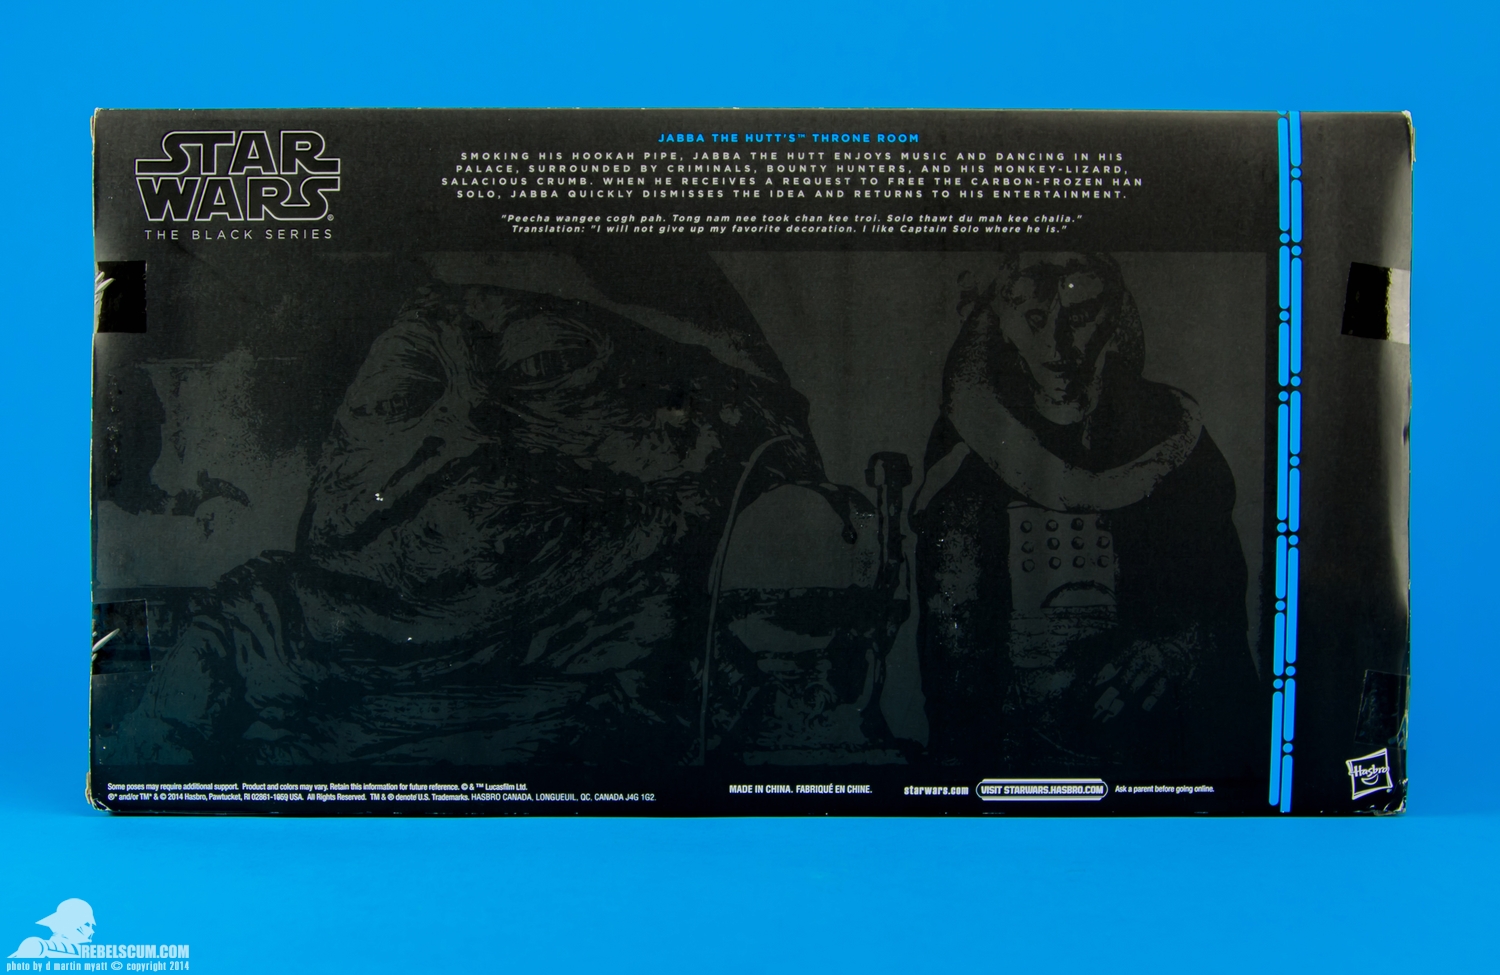 Jabbas-Throne-Room-The-Black-Series-2014-SDCC-Hasbro-043.jpg